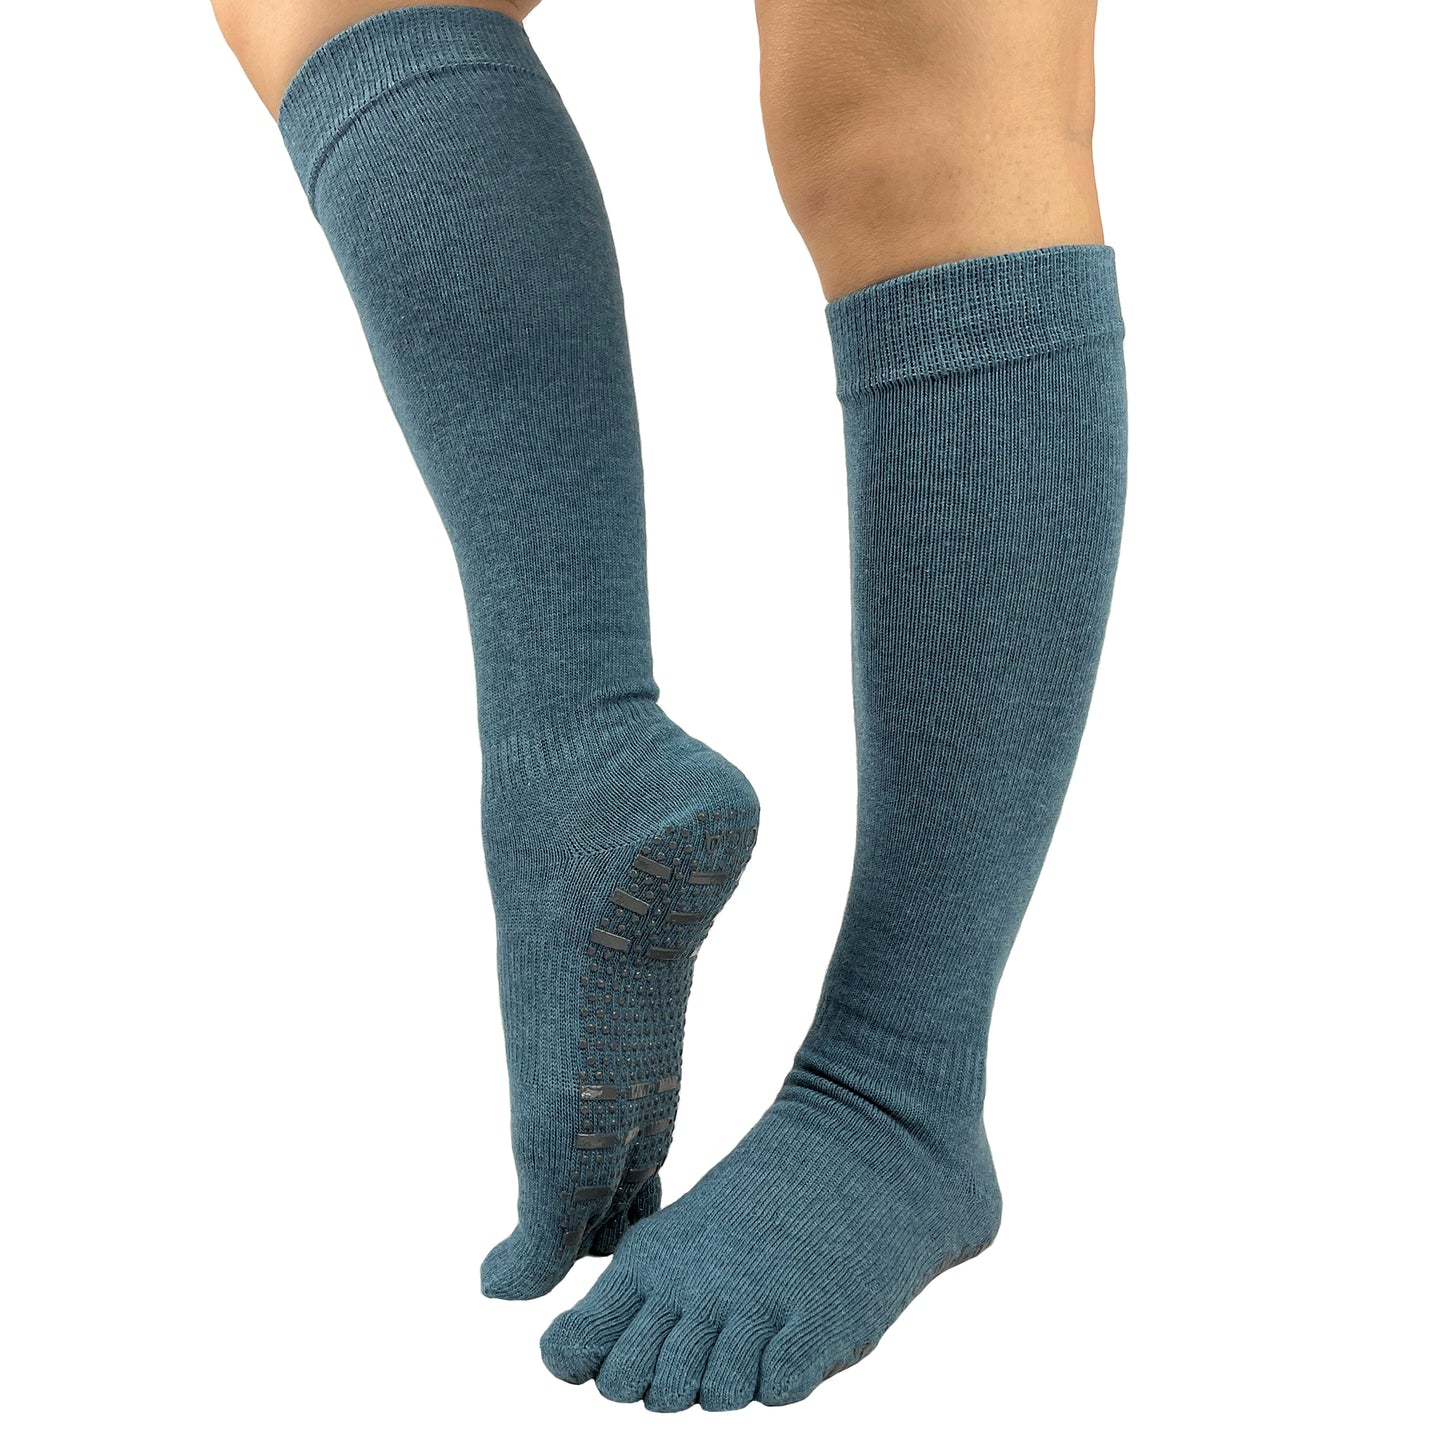 Women's Non Slip Knee Toe Socks with Grips for Yoga, Pilates, Barre and Ballet